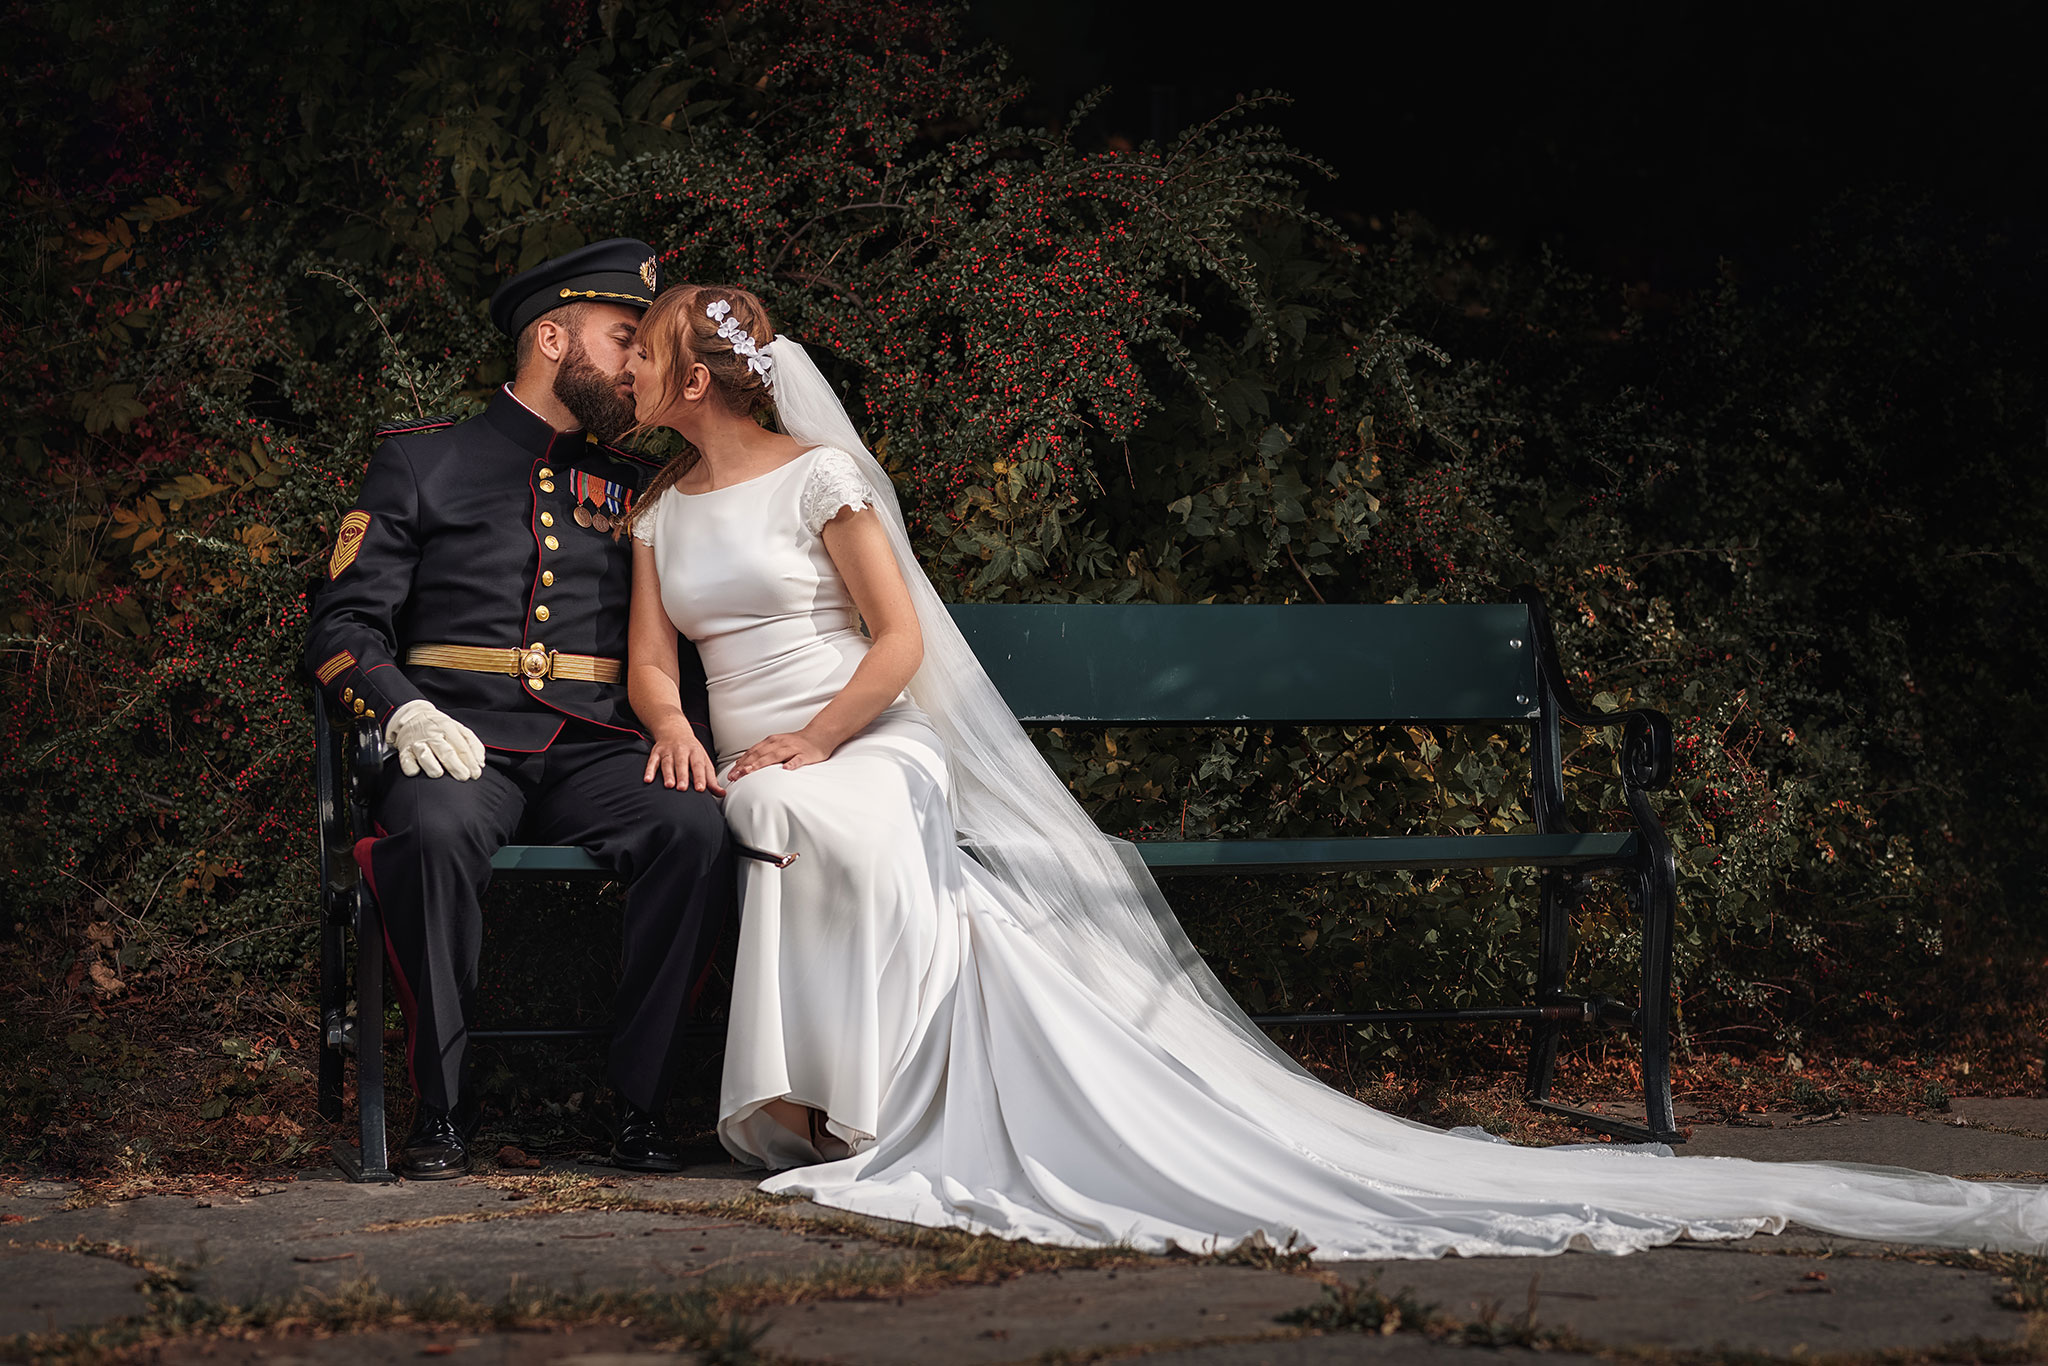 brudepar kysser på bryllupsdagen mens de sitter på en benk